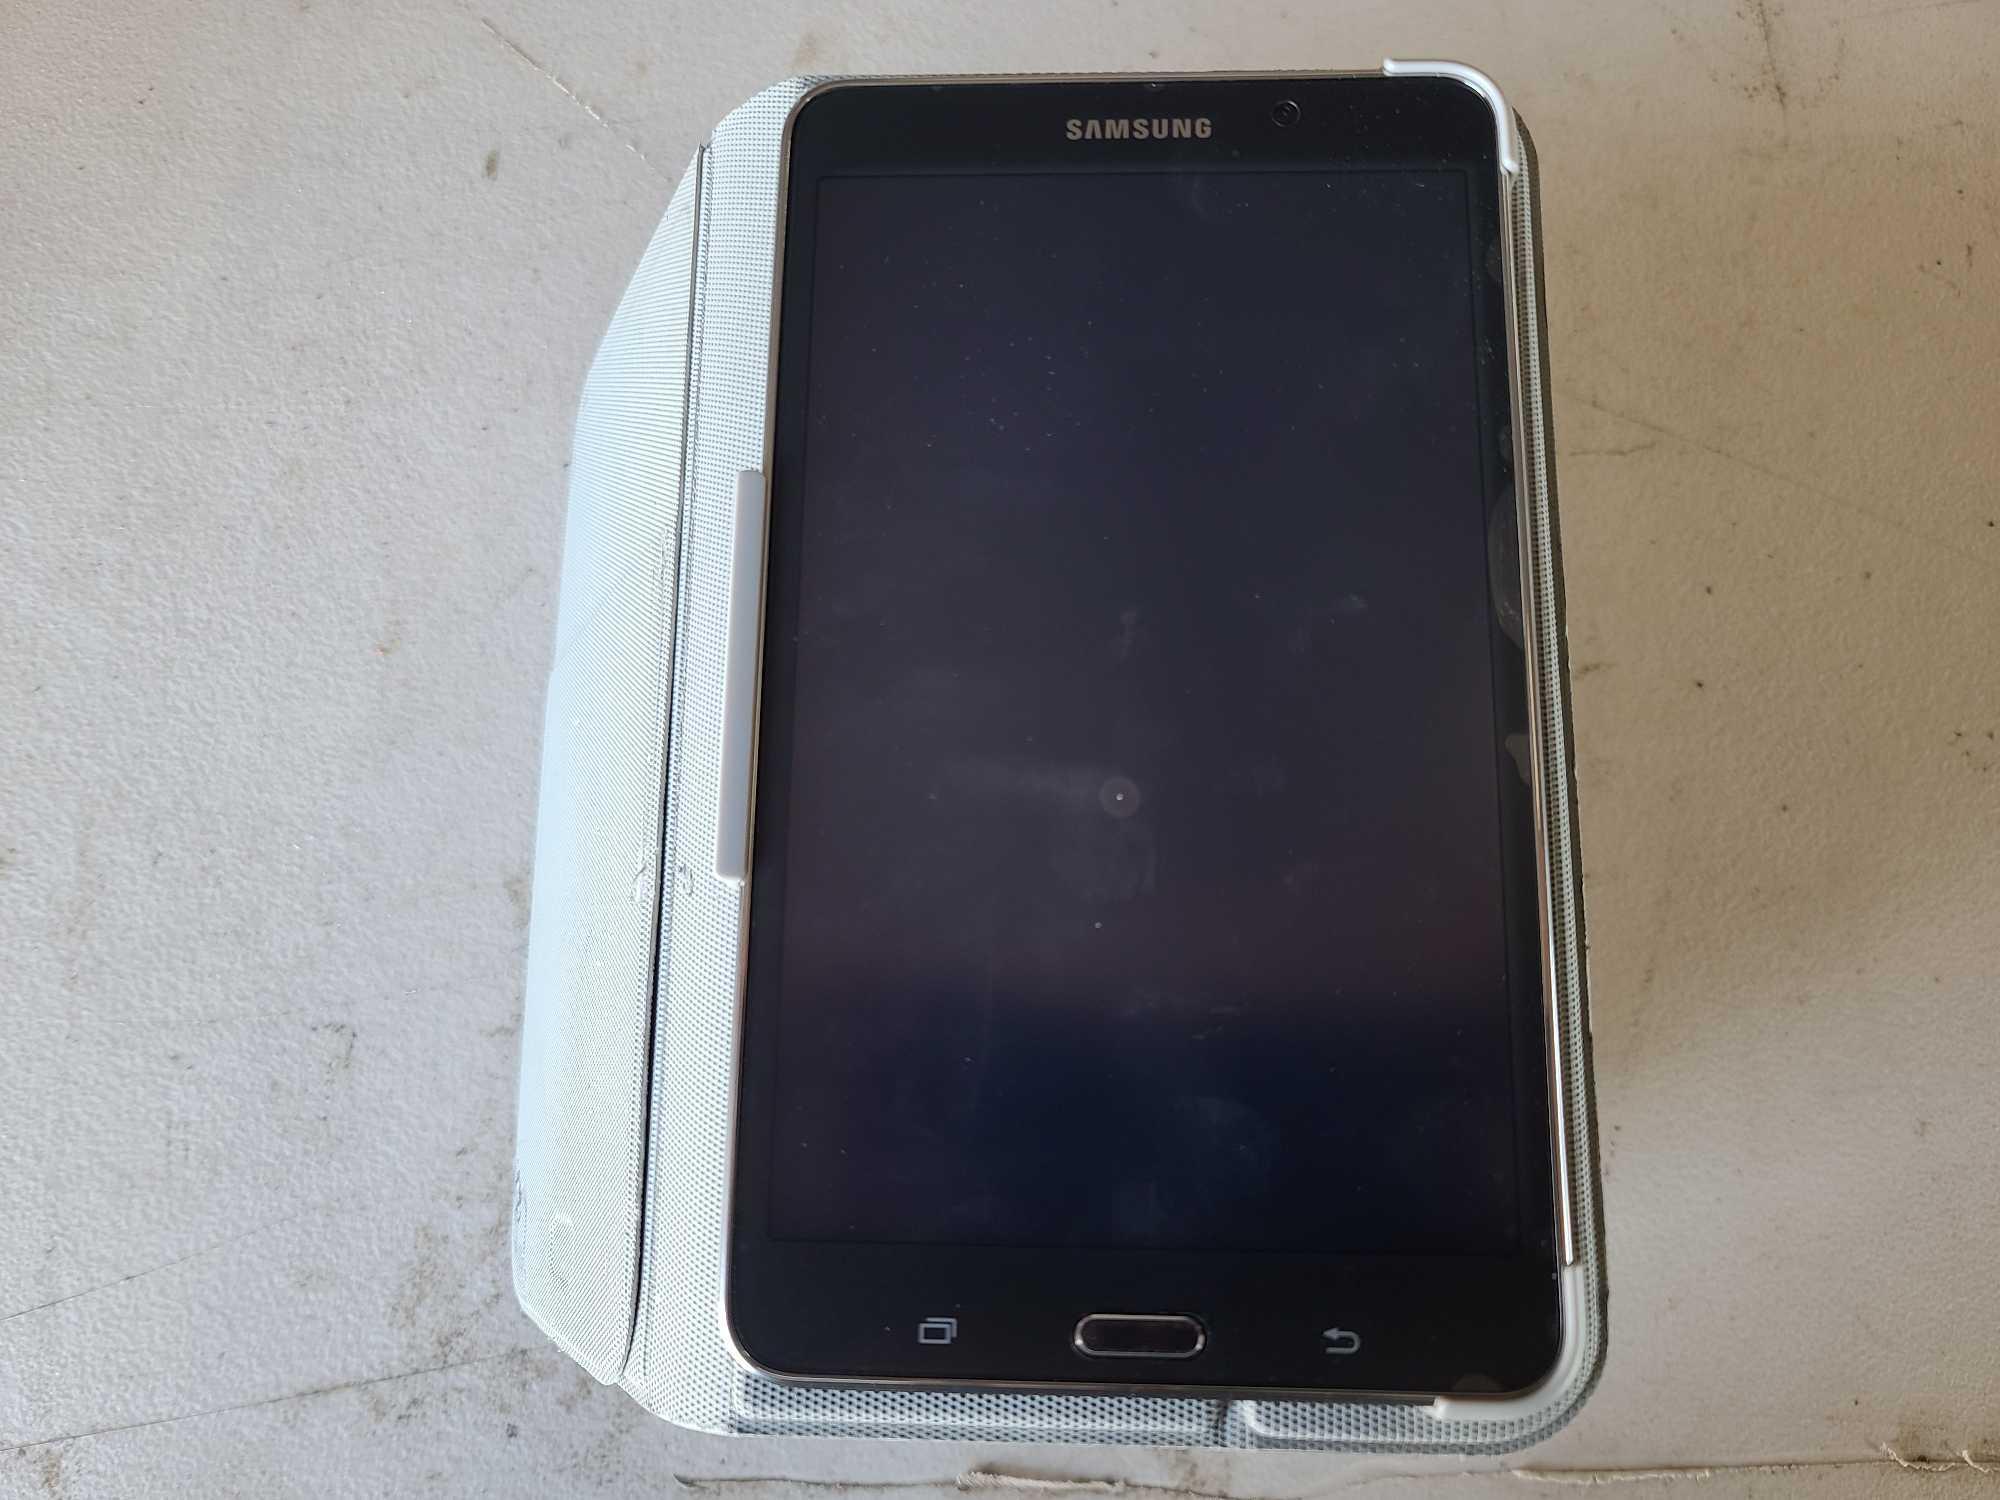 9) Samsung CE0168 Tablets | Proxibid